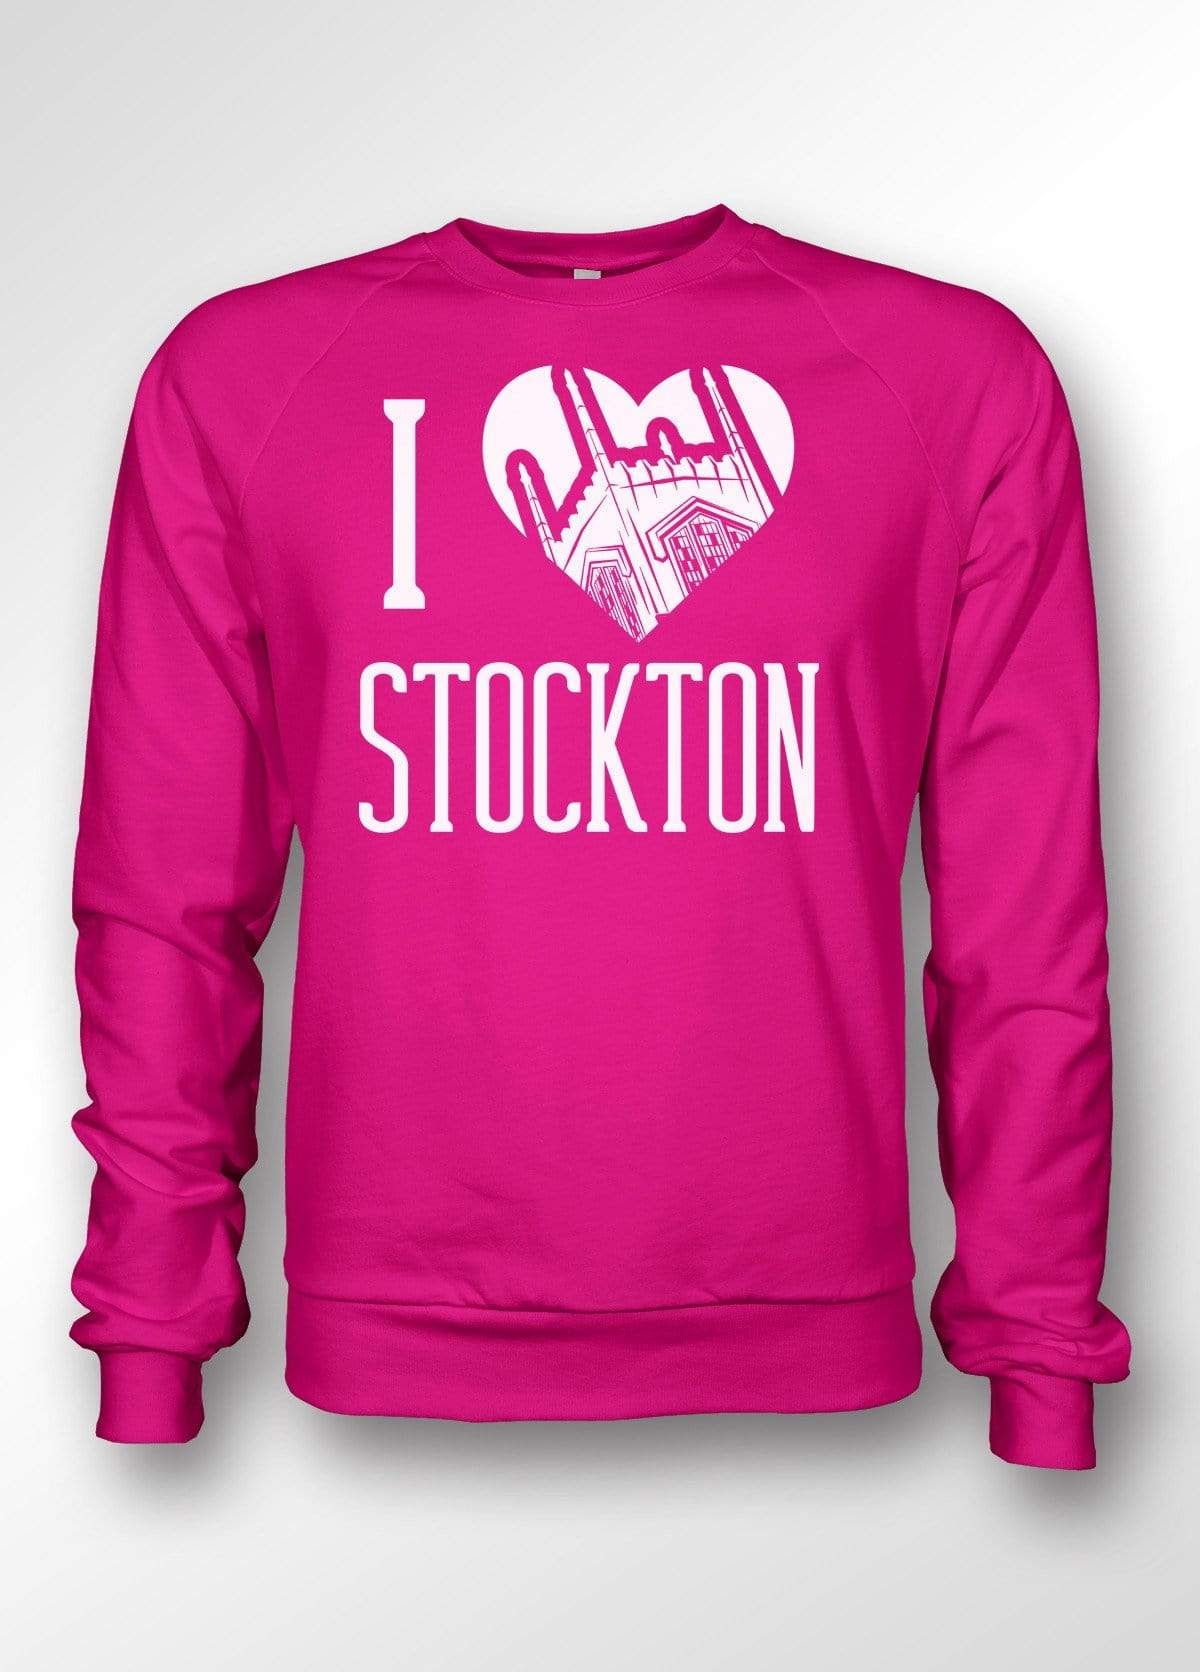 University of the Pacific Tigers I Love Stockton: Burns Tower Crewneck Sweatshirt by Zeus Collegiate